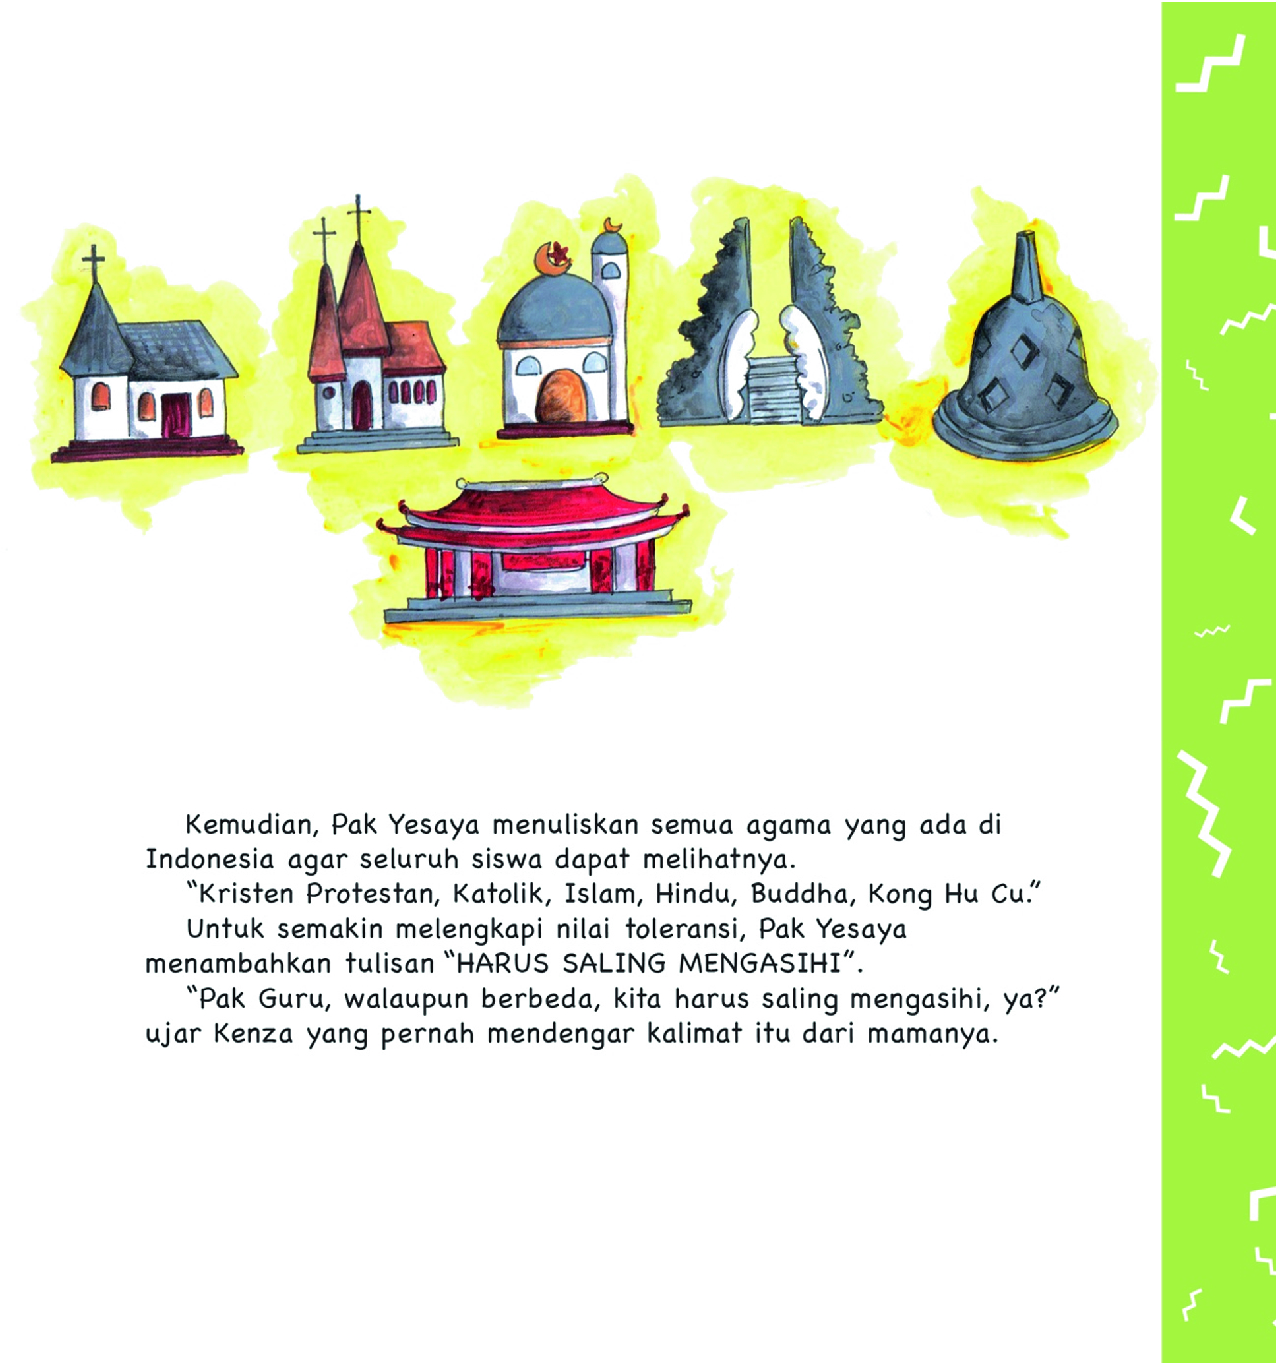 Seeking Unity In Diversity Contemporary Children S Books In Indonesia Springerlink